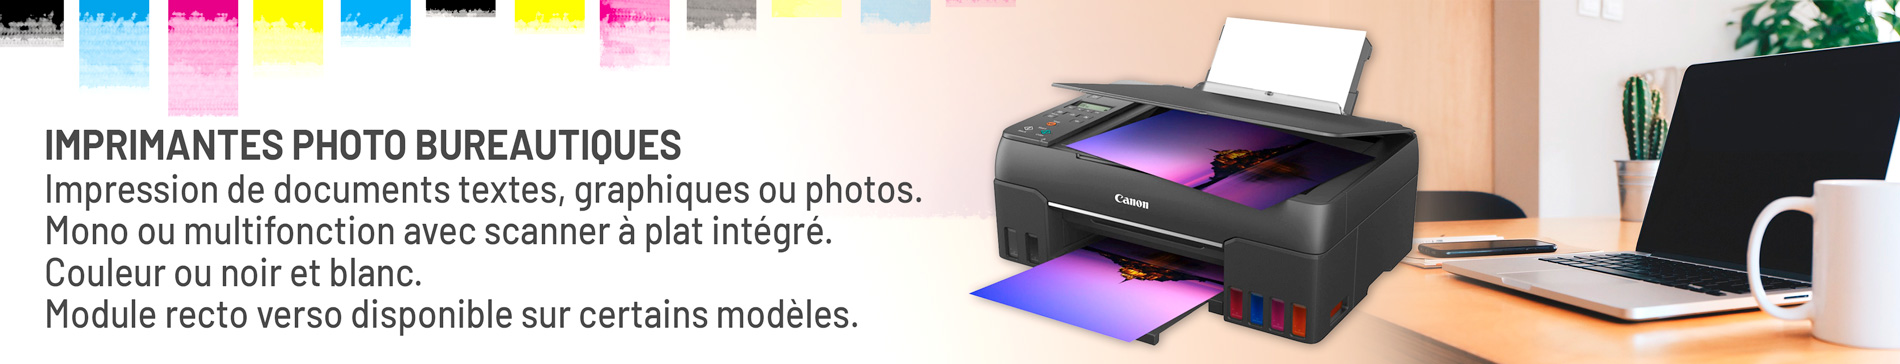 imprimantes-photo-bureautiques